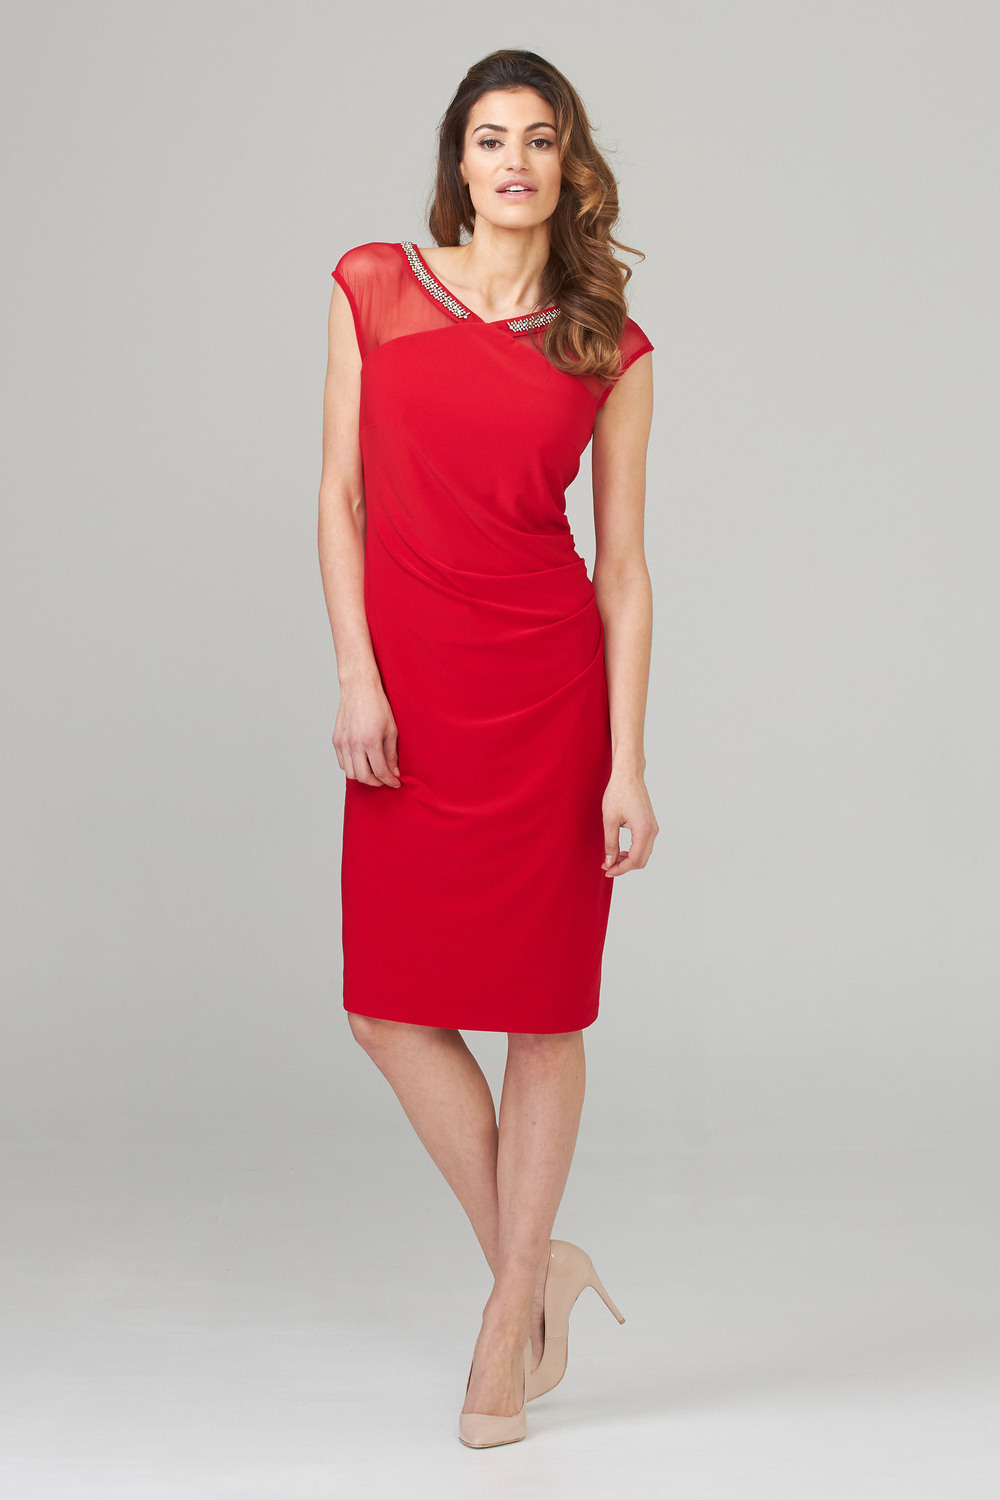 Joseph Ribkoff Dress Style 201004. Lipstick Red 173